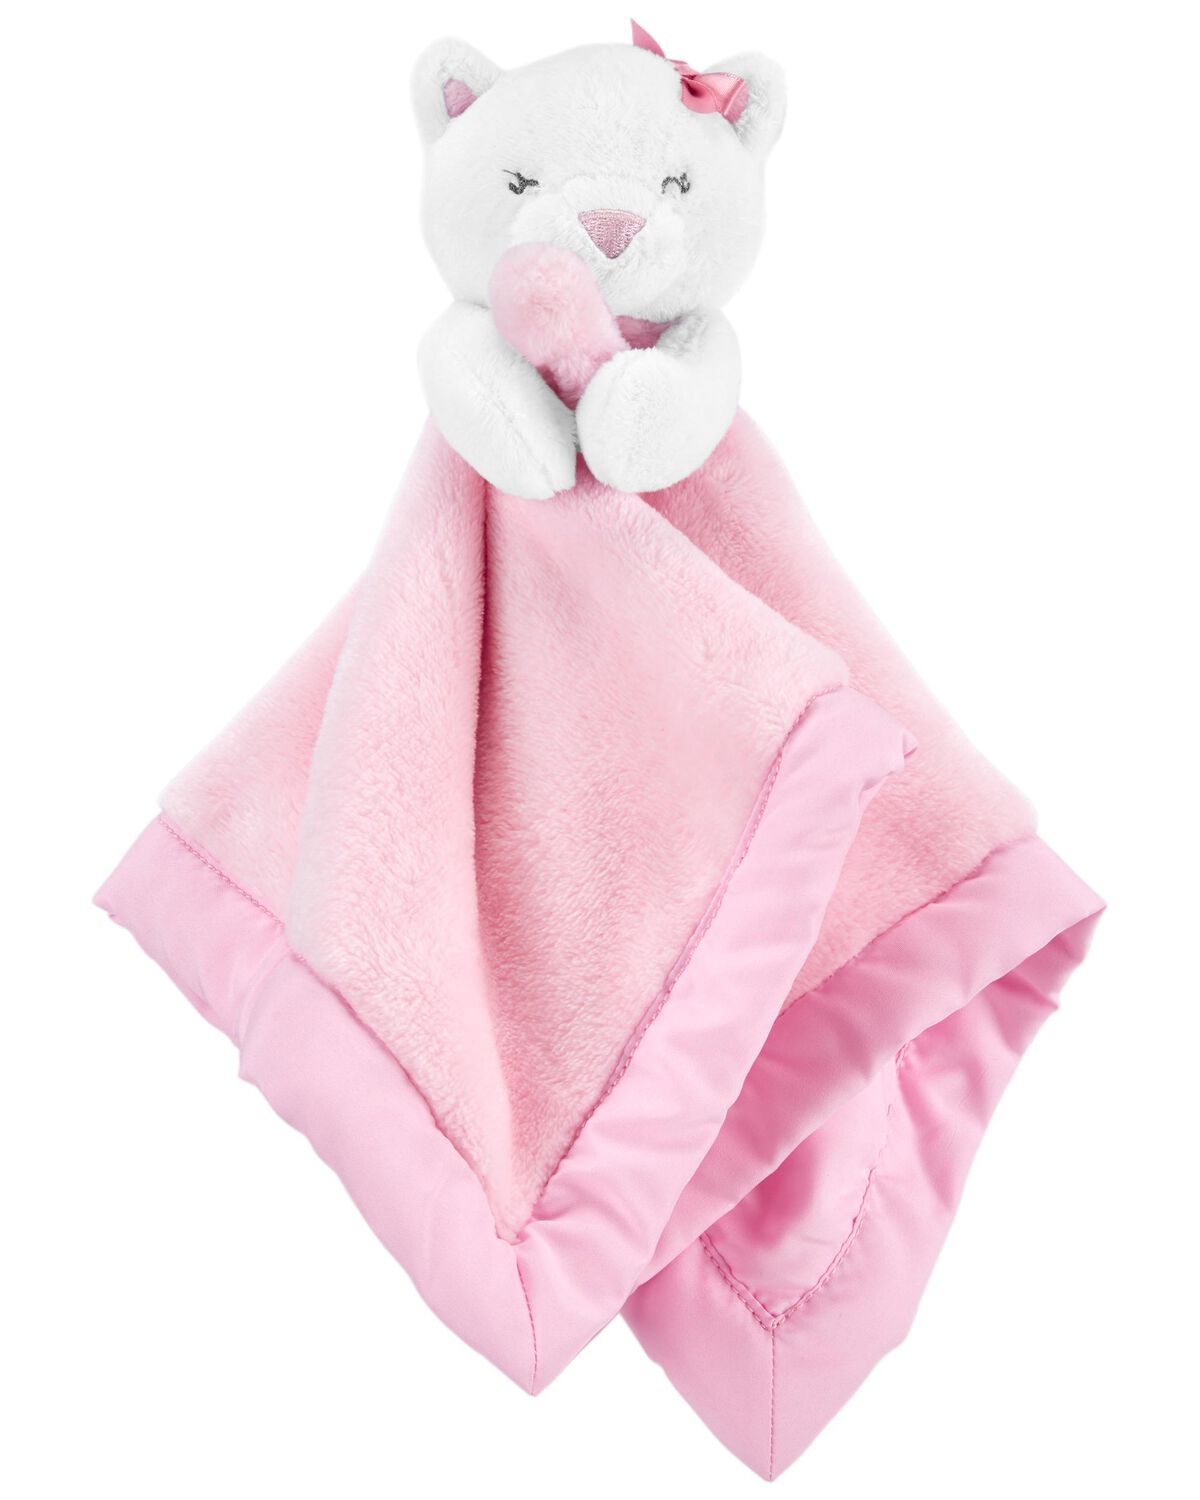 Carters Pink/White Baby Kitten Plush Lovey